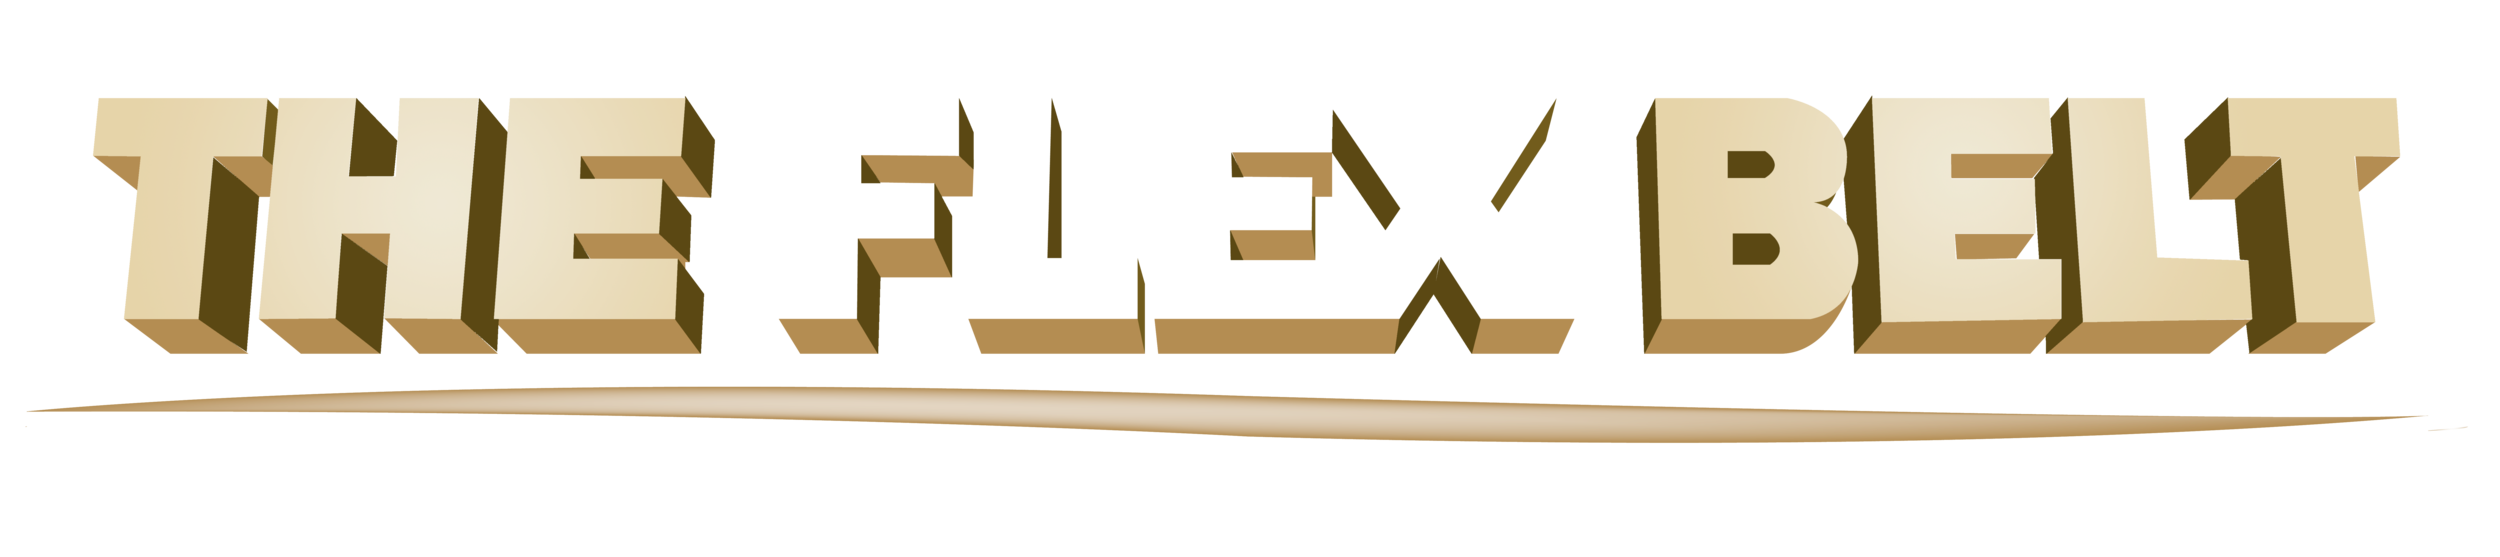 flexbelt.png